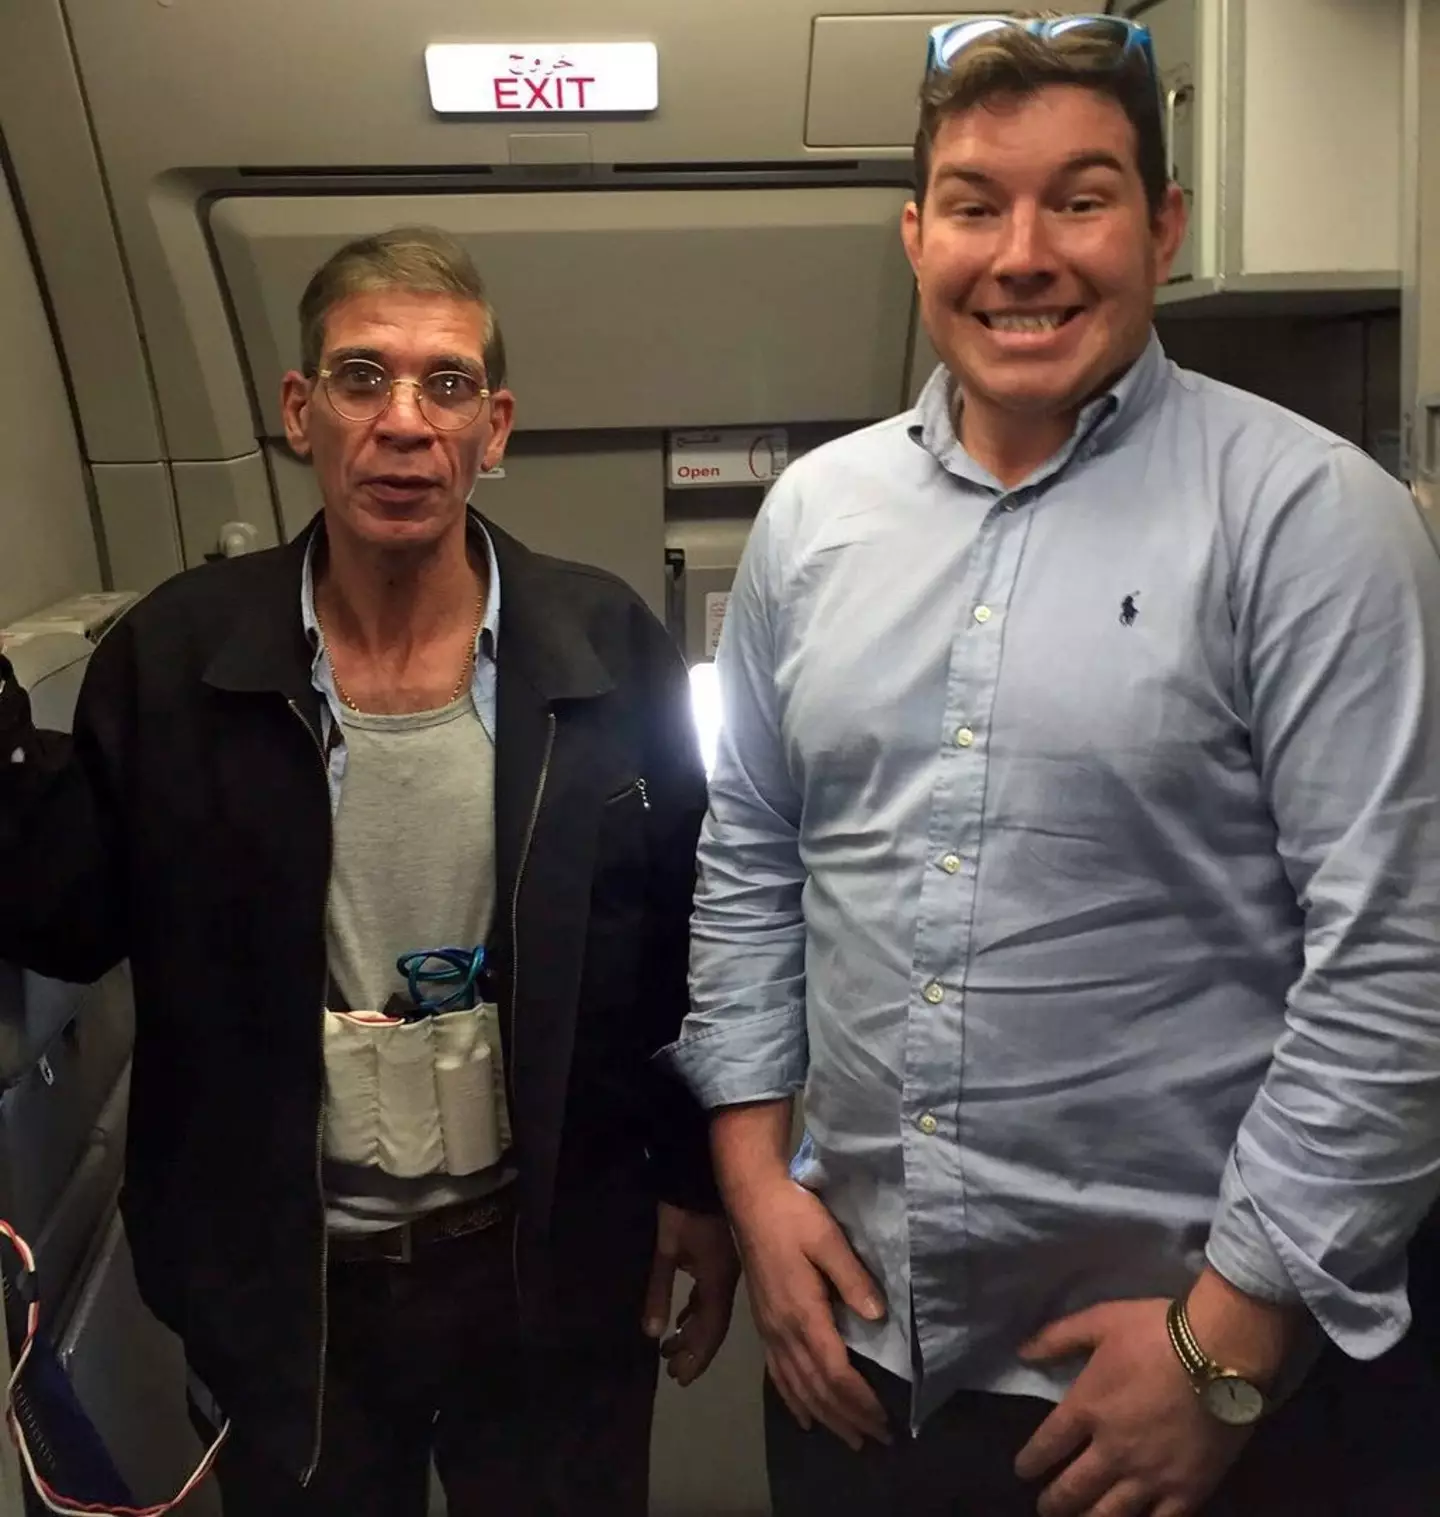 Ben Innes pictured with the hijacker, Seif Eldin Mustafa.